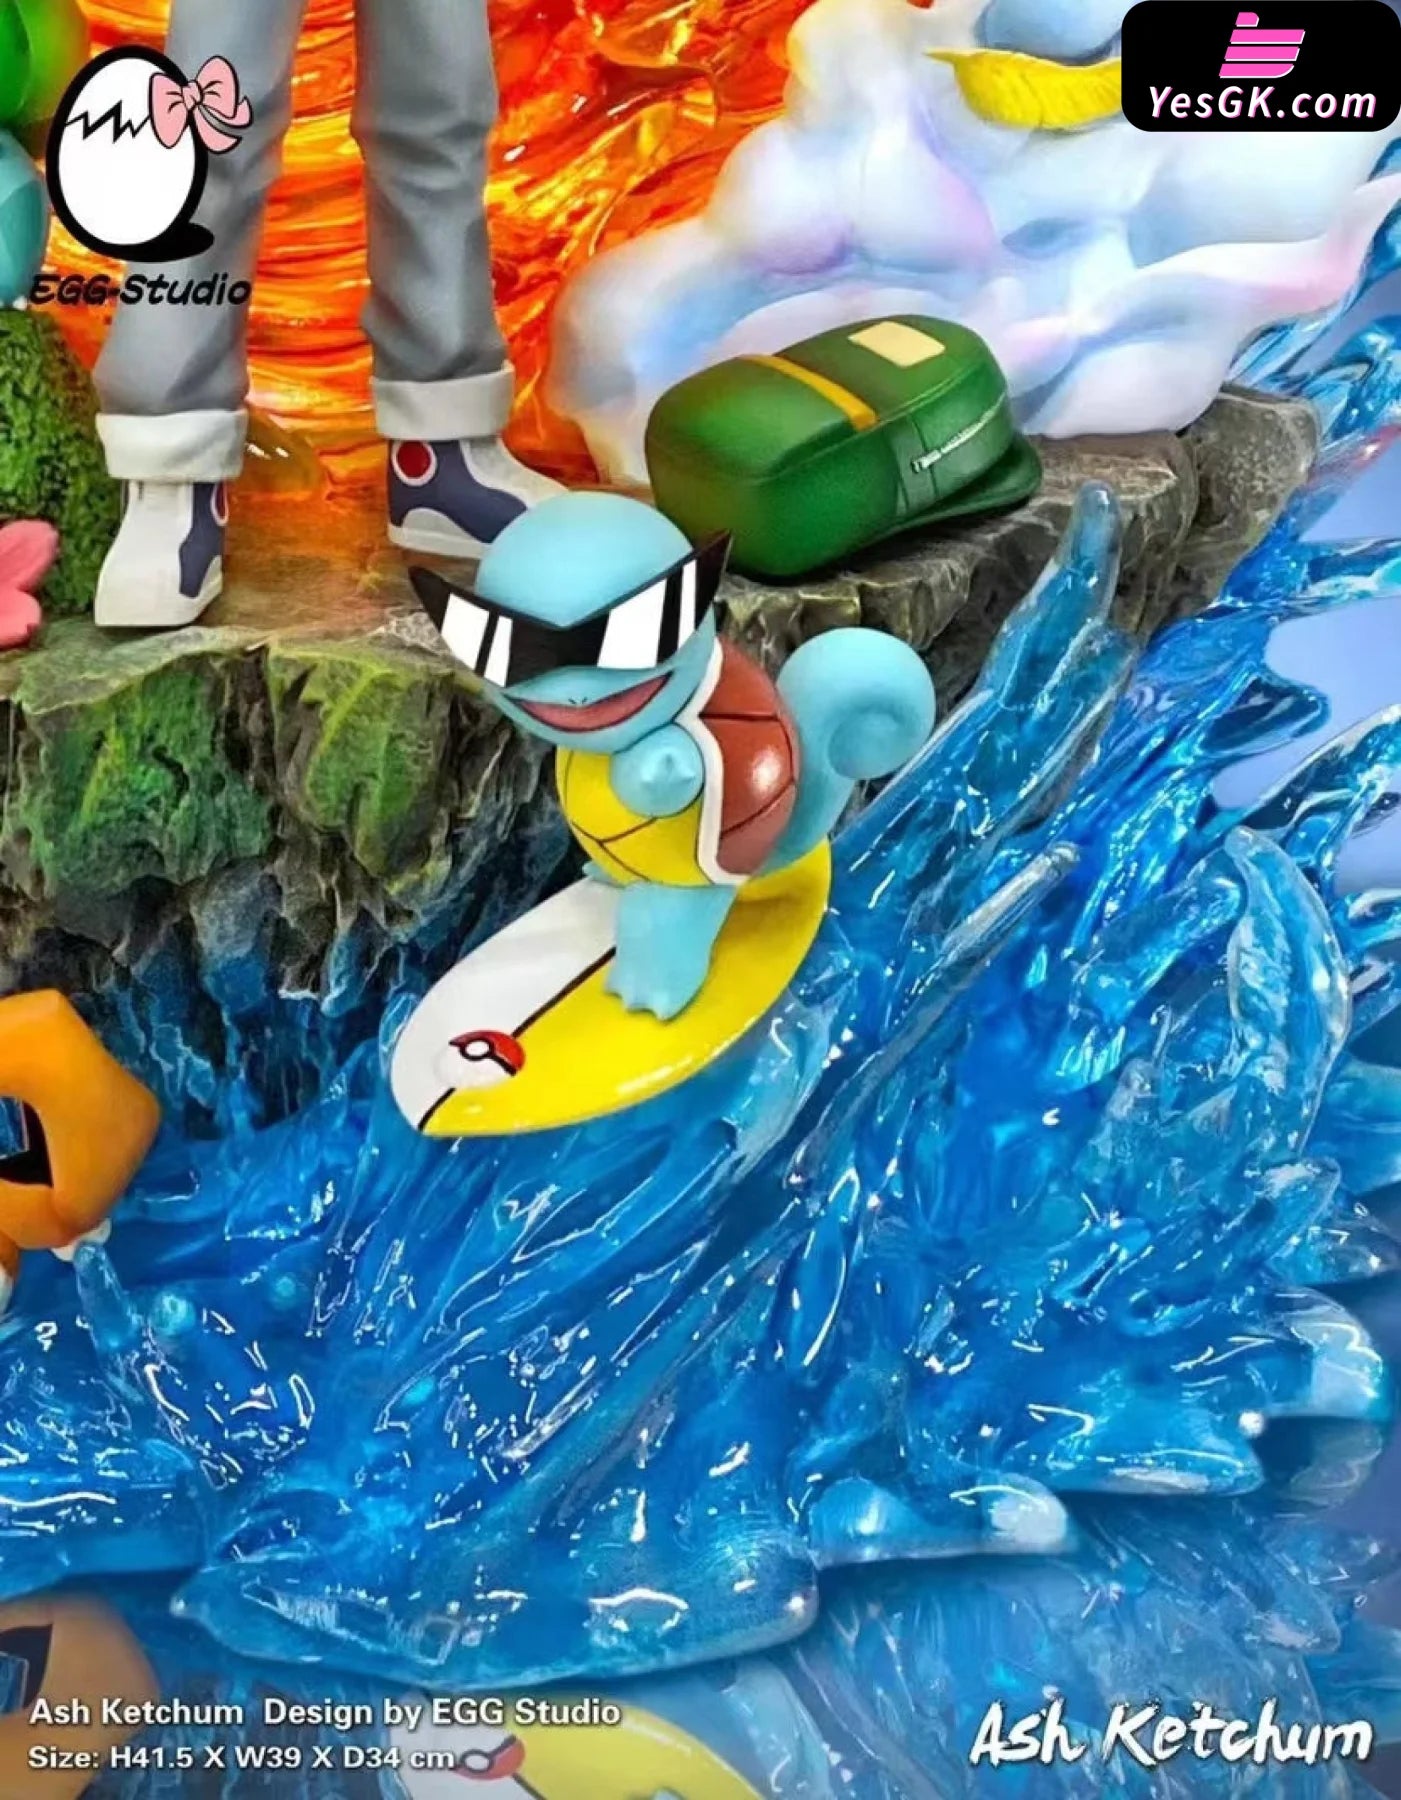 Pokémon Foursome #1 Ash Family Portrait Statue - Egg Studio [In Stock]